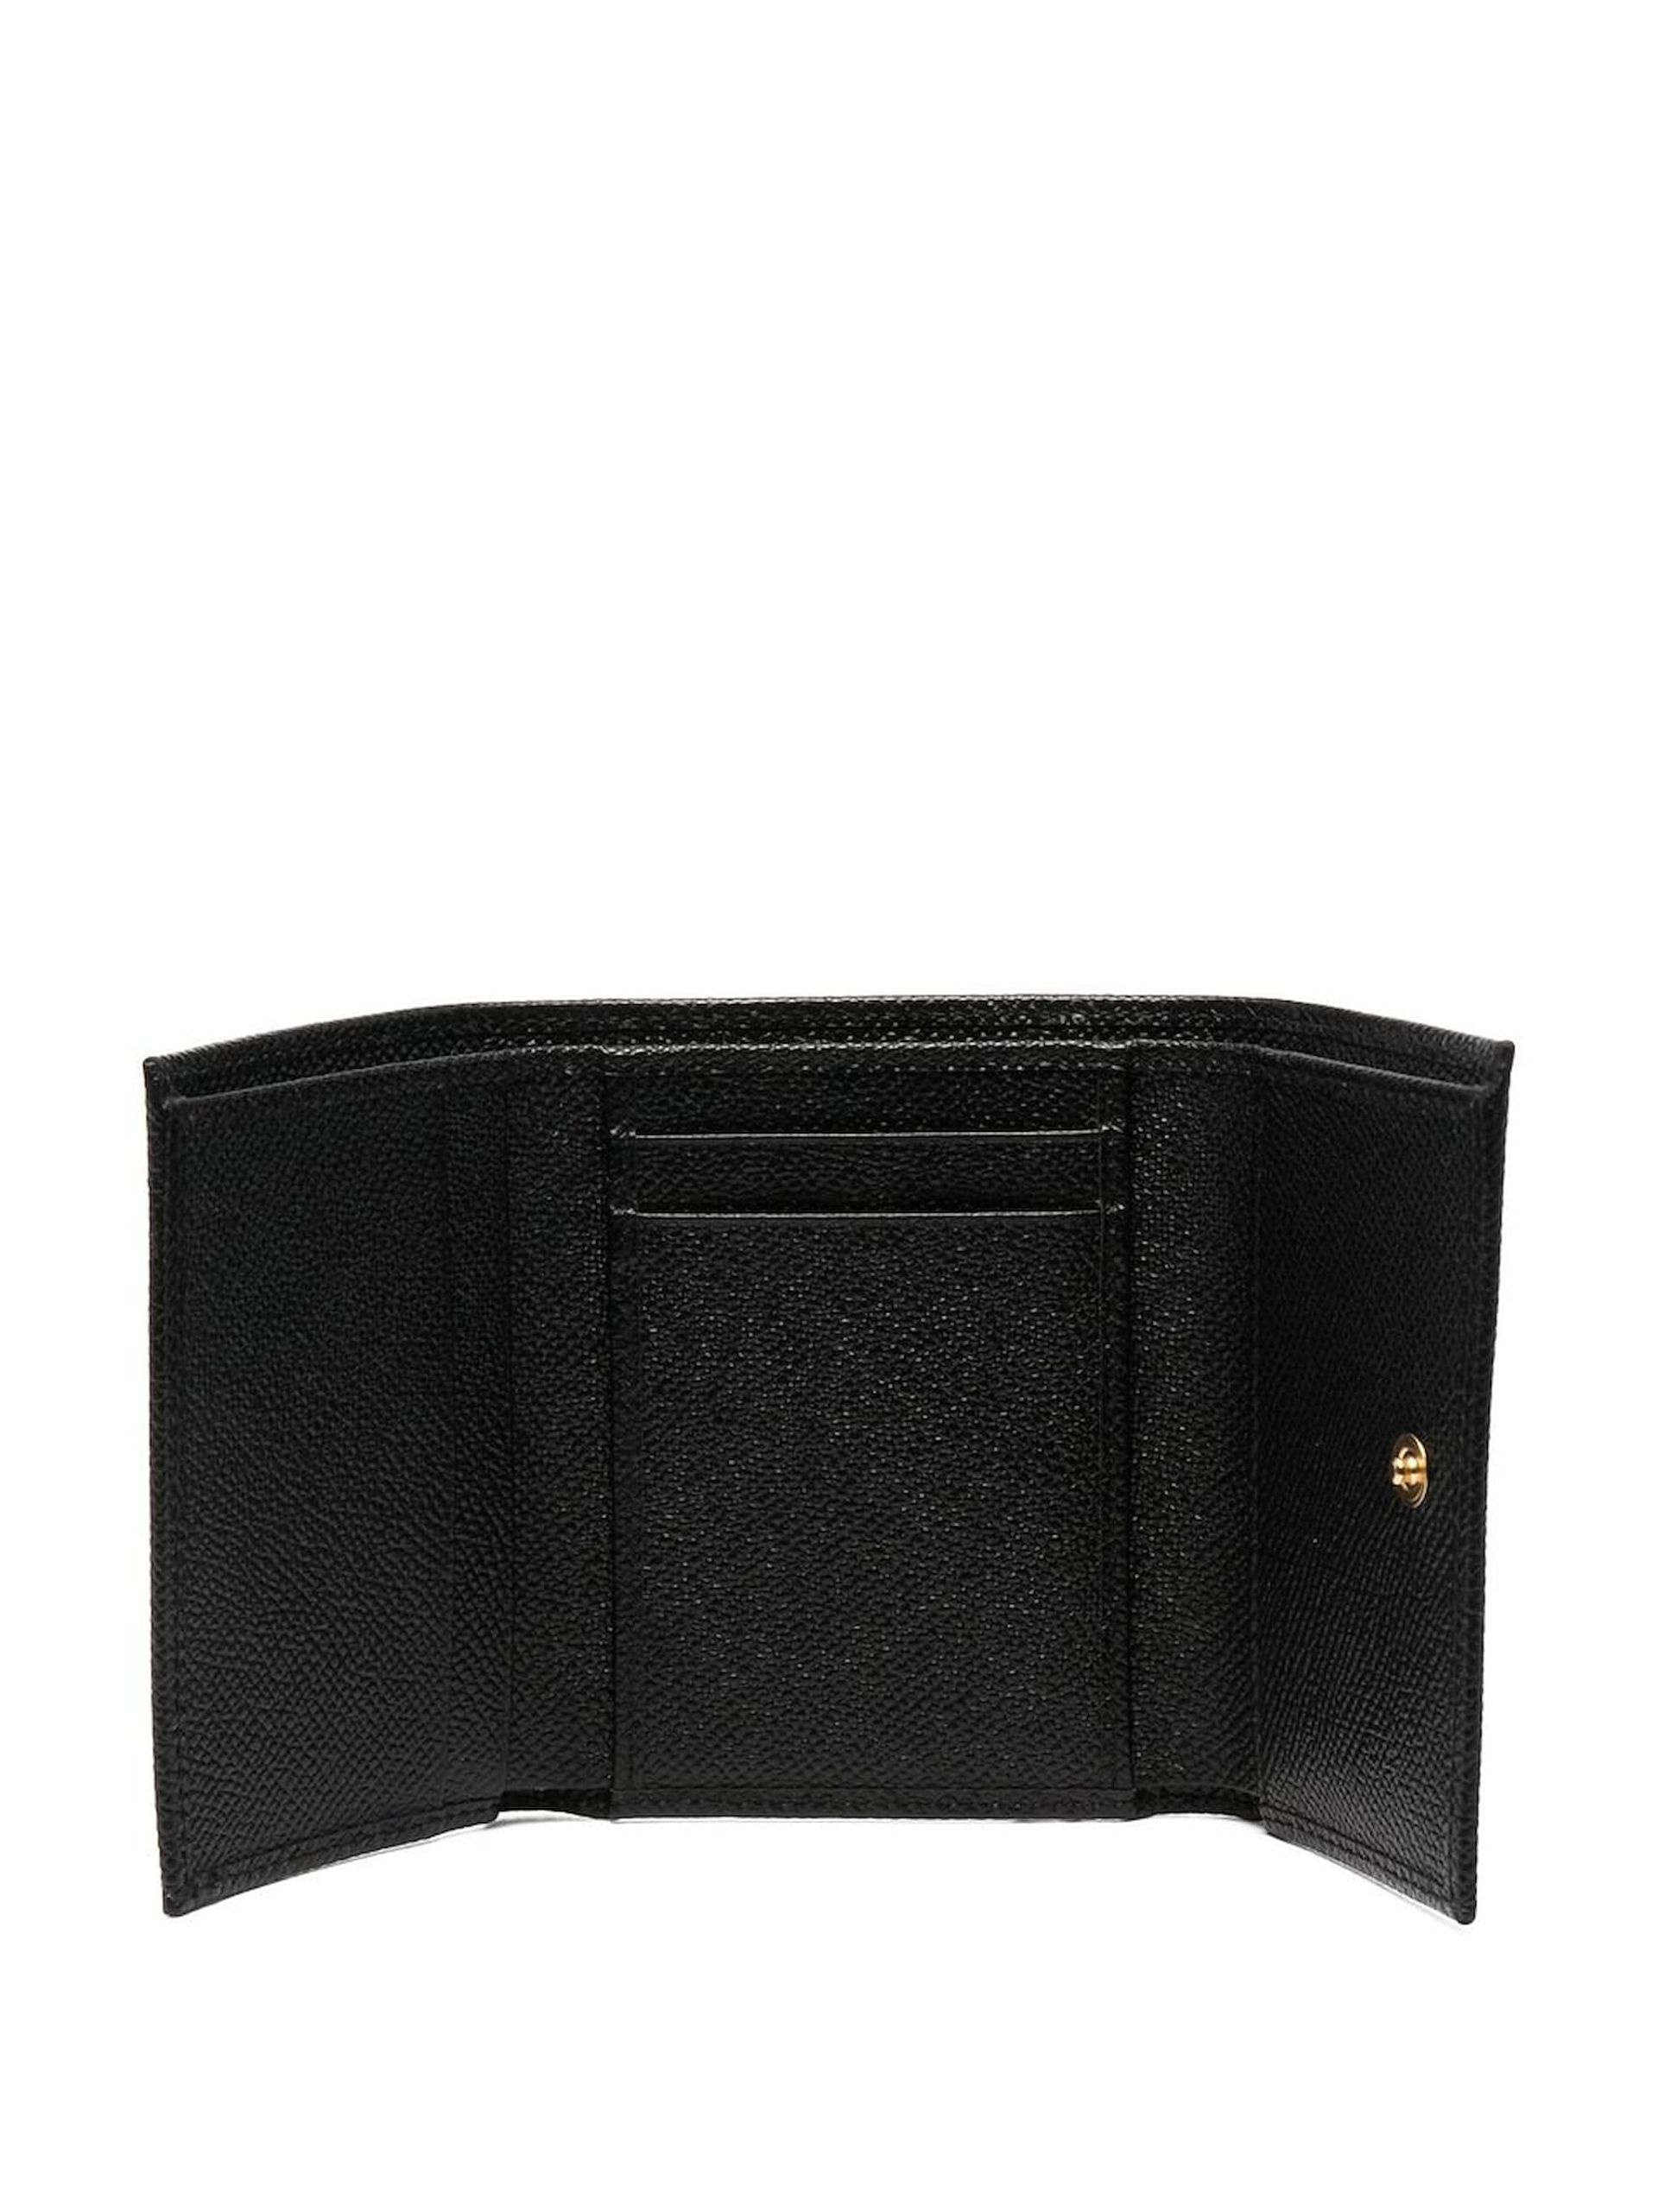 Black Dauphine Leather Wallet - 6